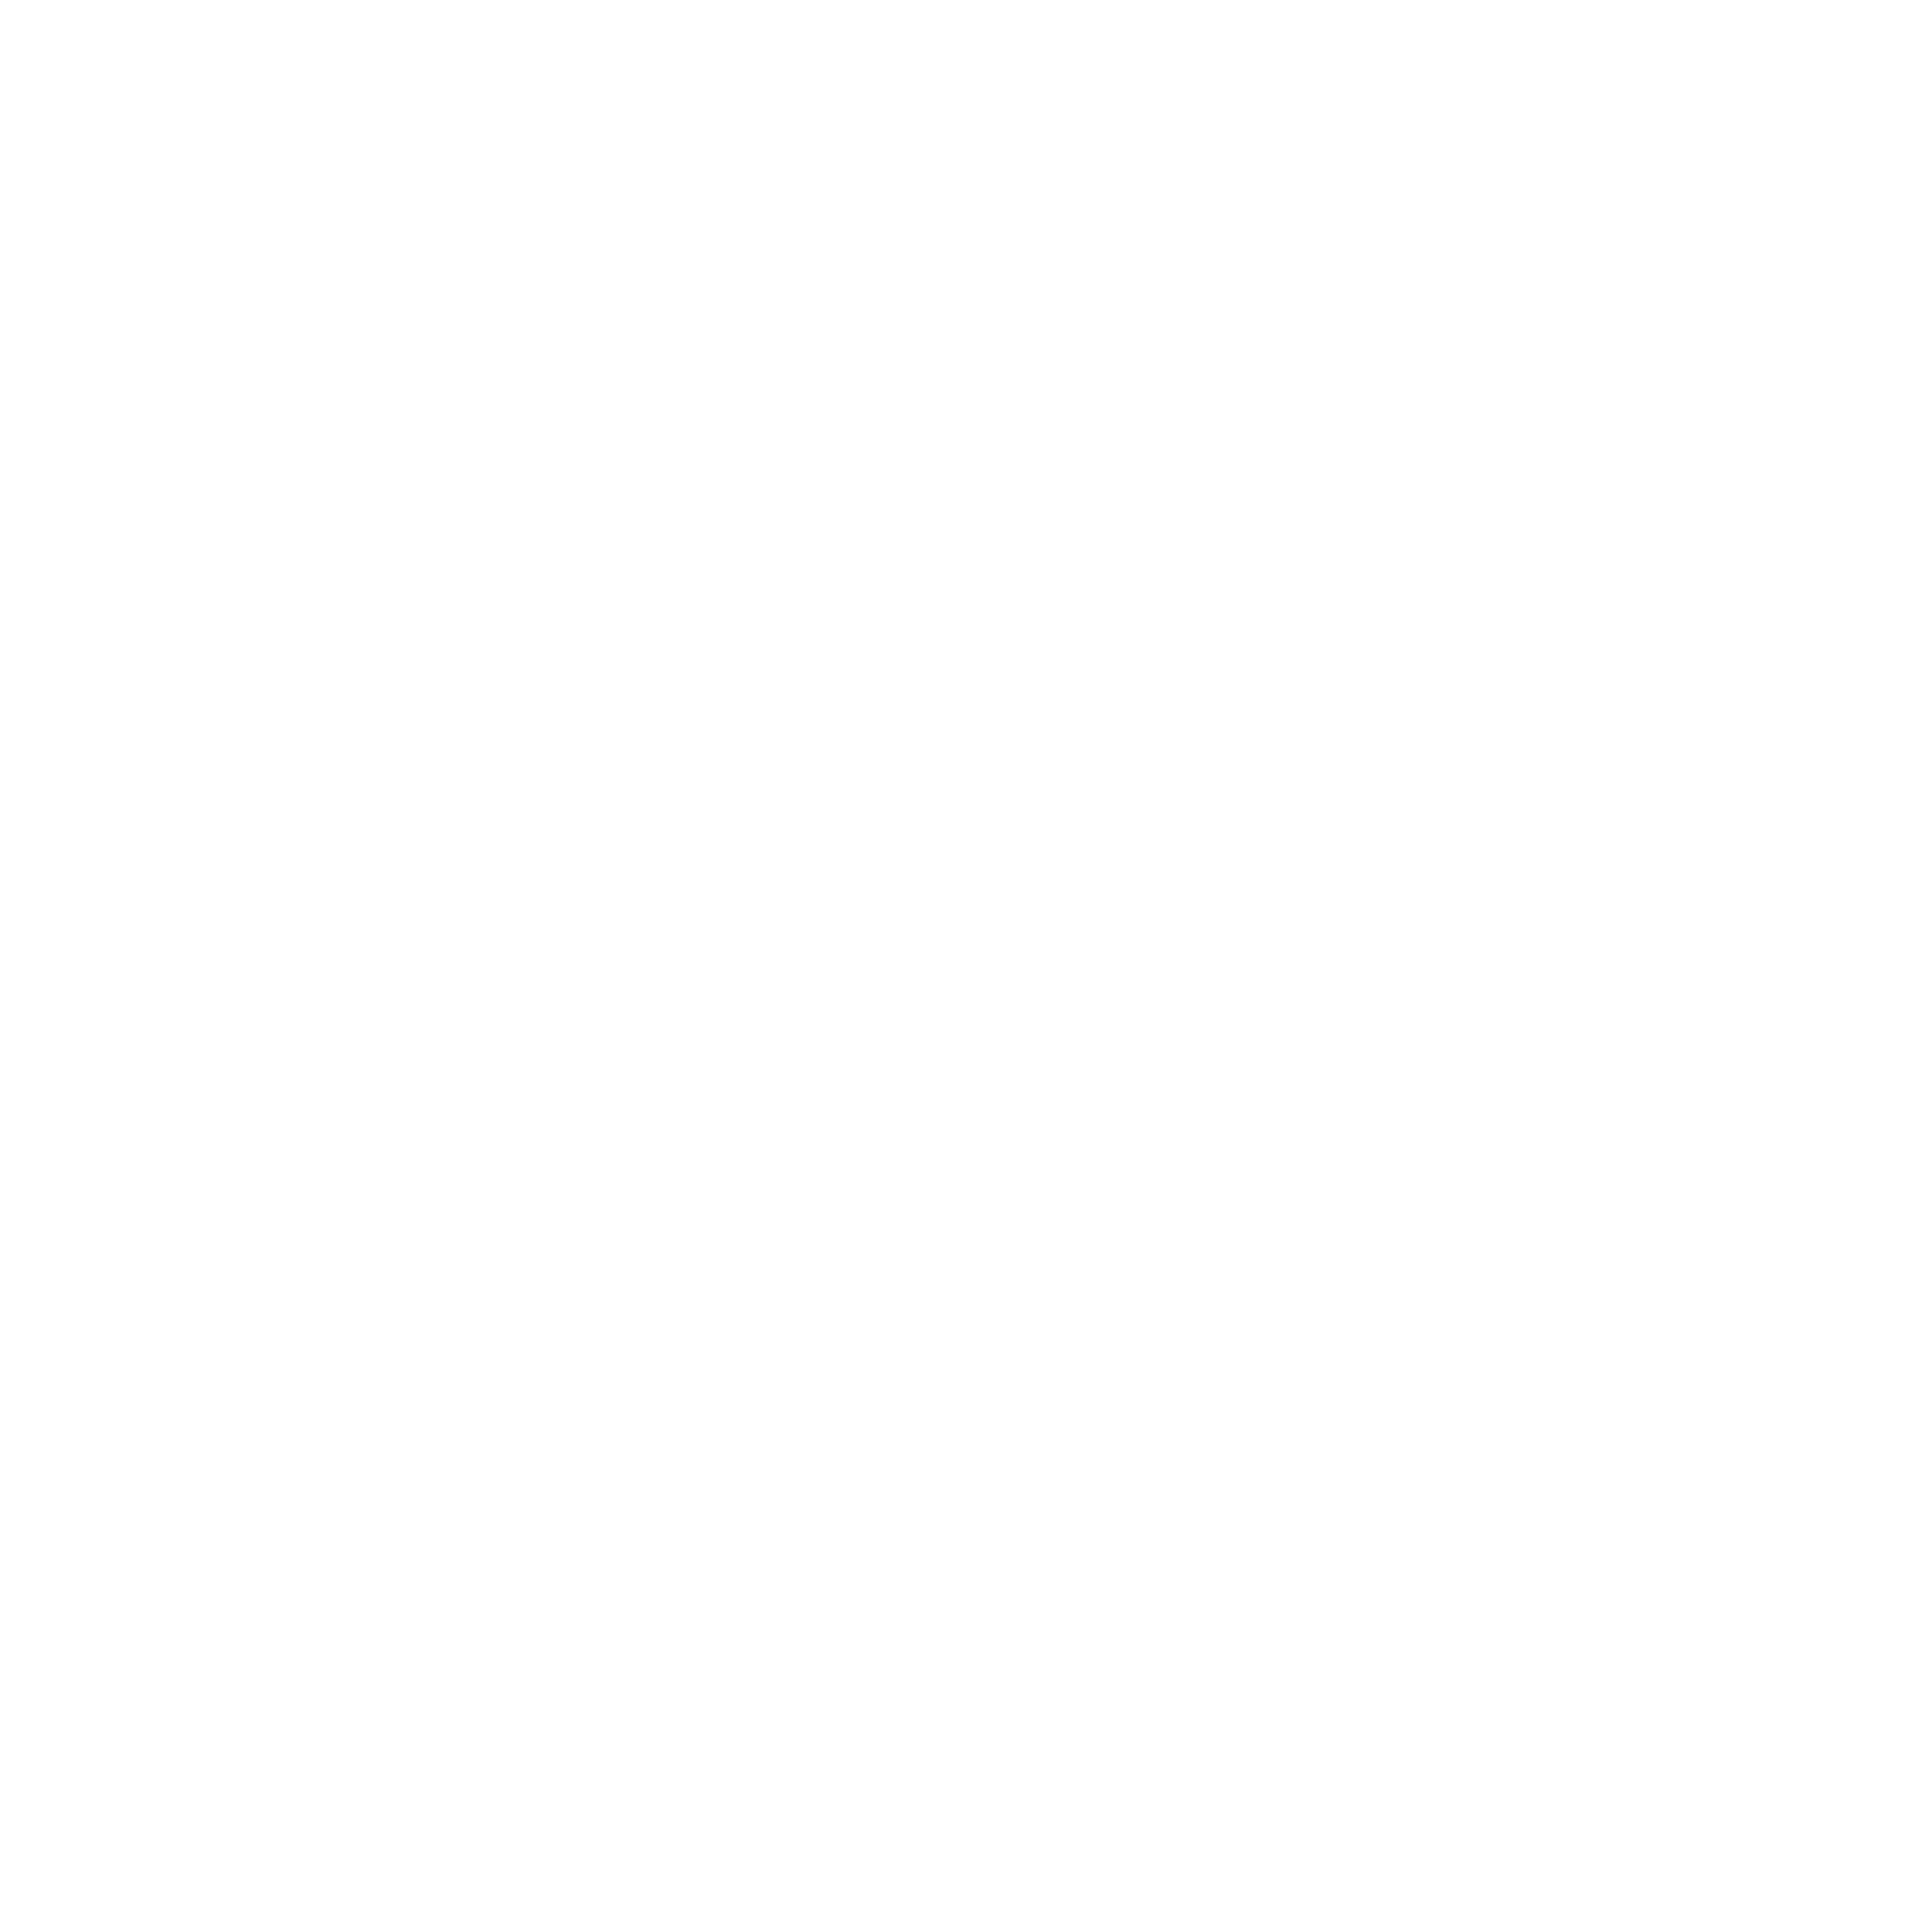 Knauf Logo - Knauf Logo PNG Transparent & SVG Vector - Freebie Supply